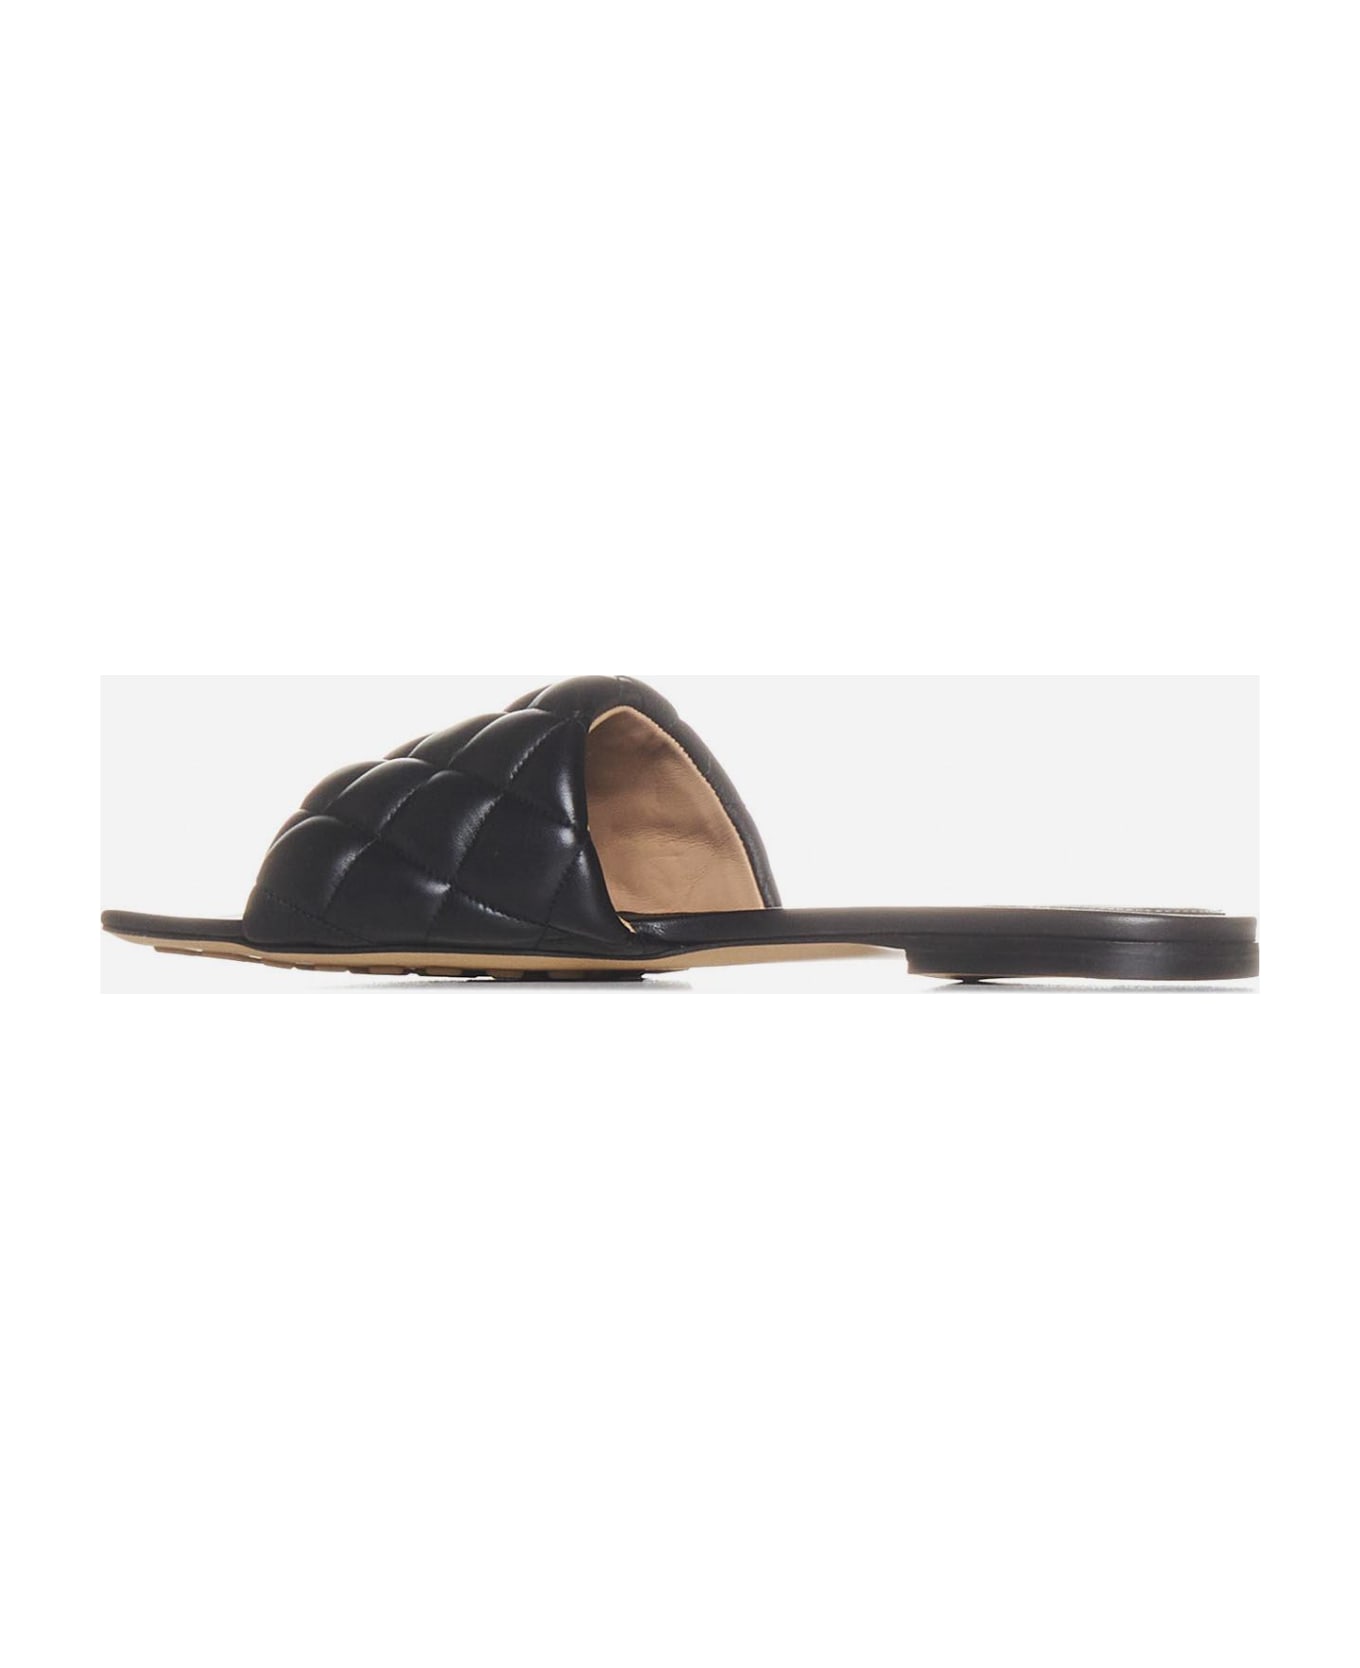 Bottega Veneta Padded Intrecciato Leather Flat Sandals - Black サンダル